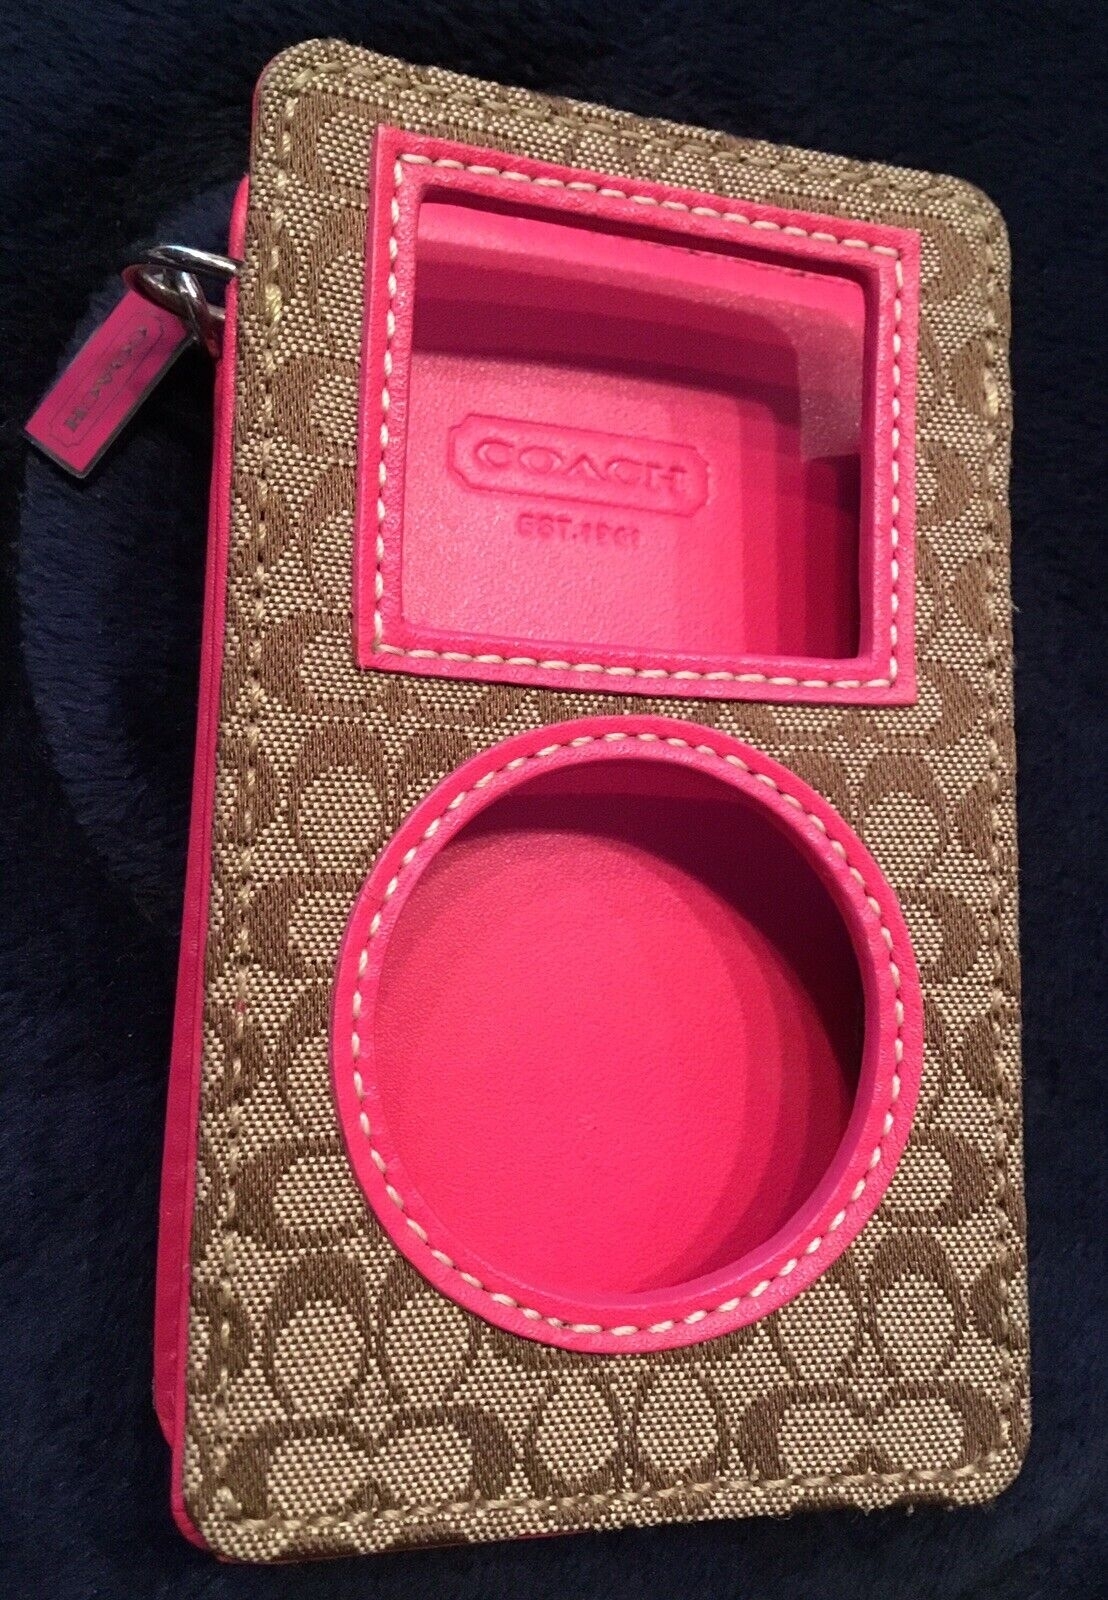 A Coach iPod case